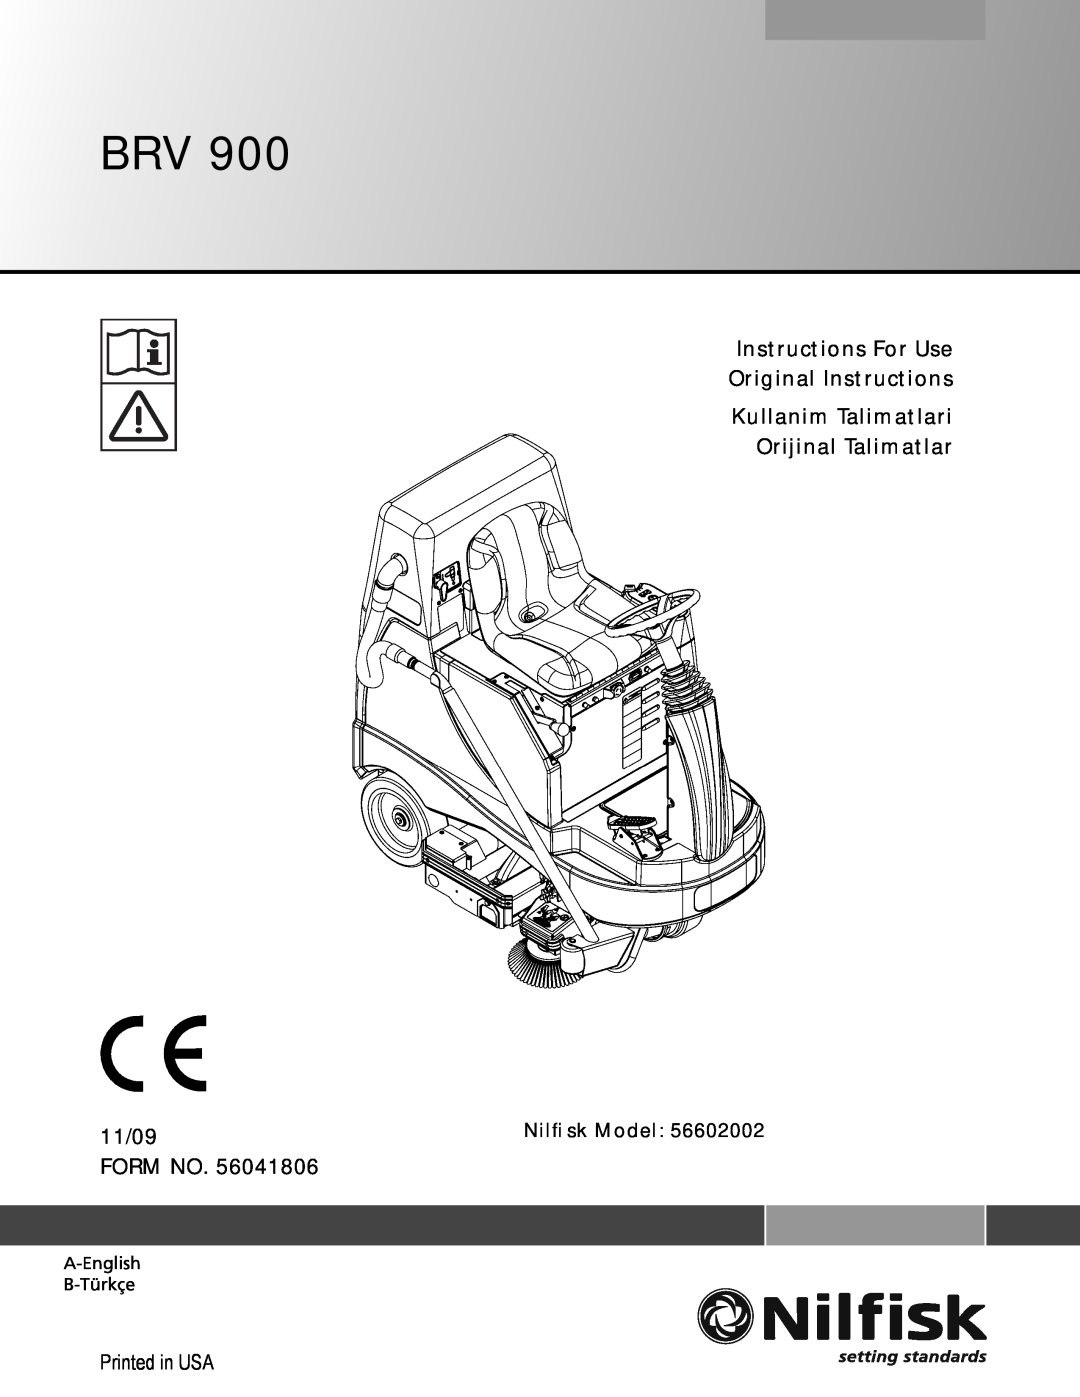 Nilfisk-Advance America BRV 900 manual Instructions For Use Original Instructions, 11/09, Form No, Nilﬁsk Model 